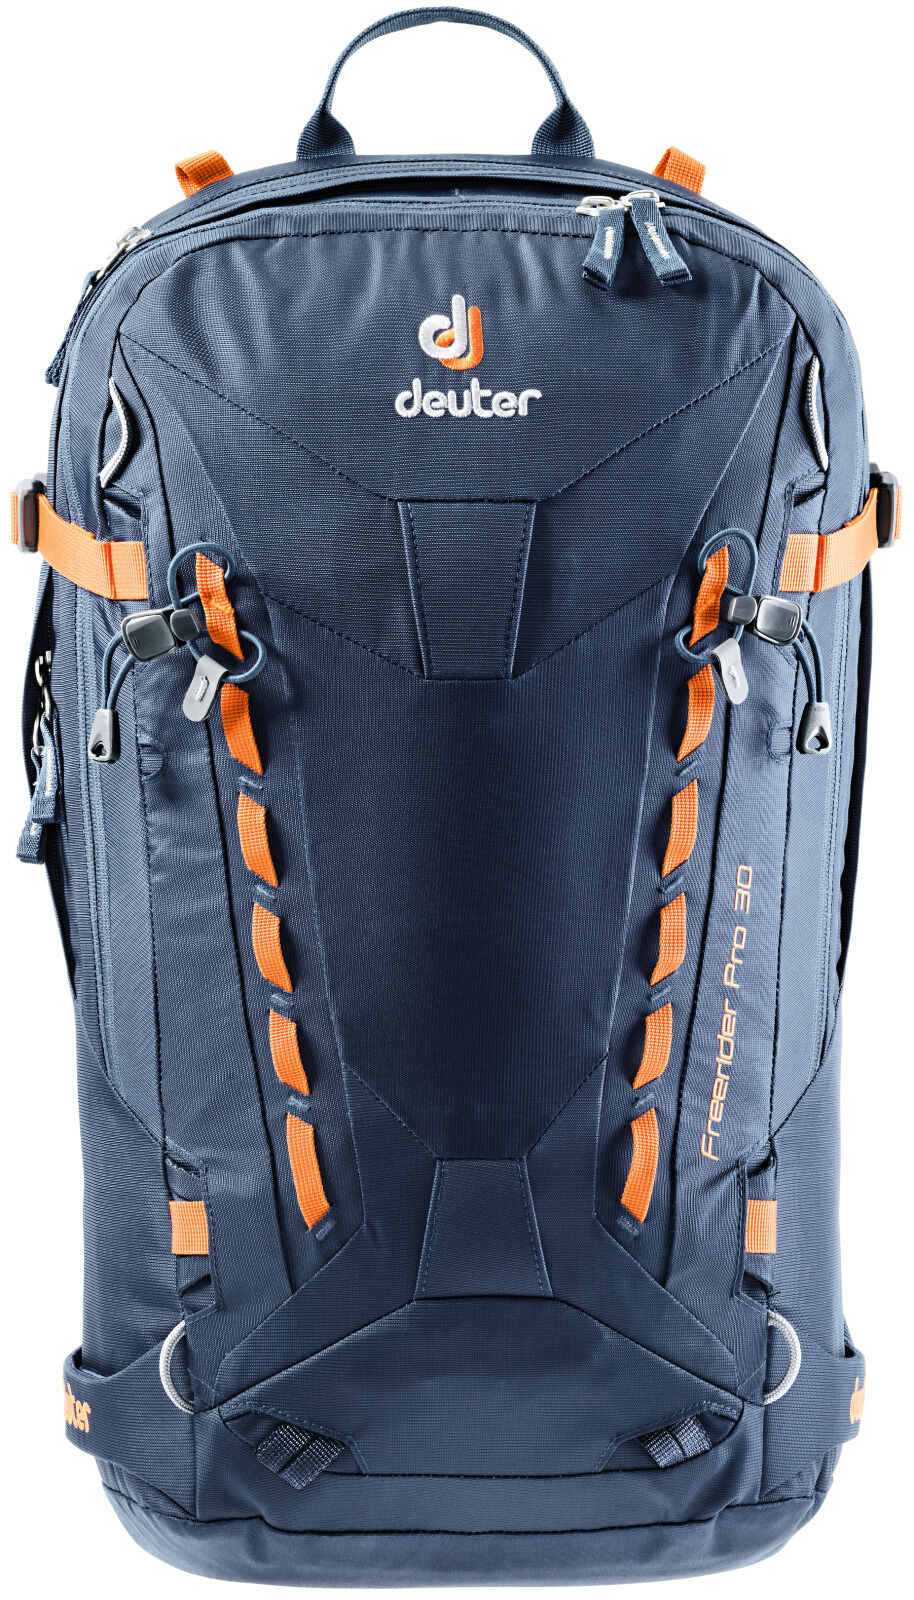 Deuter - Freerider Pro 30 - Ski Touring backpack